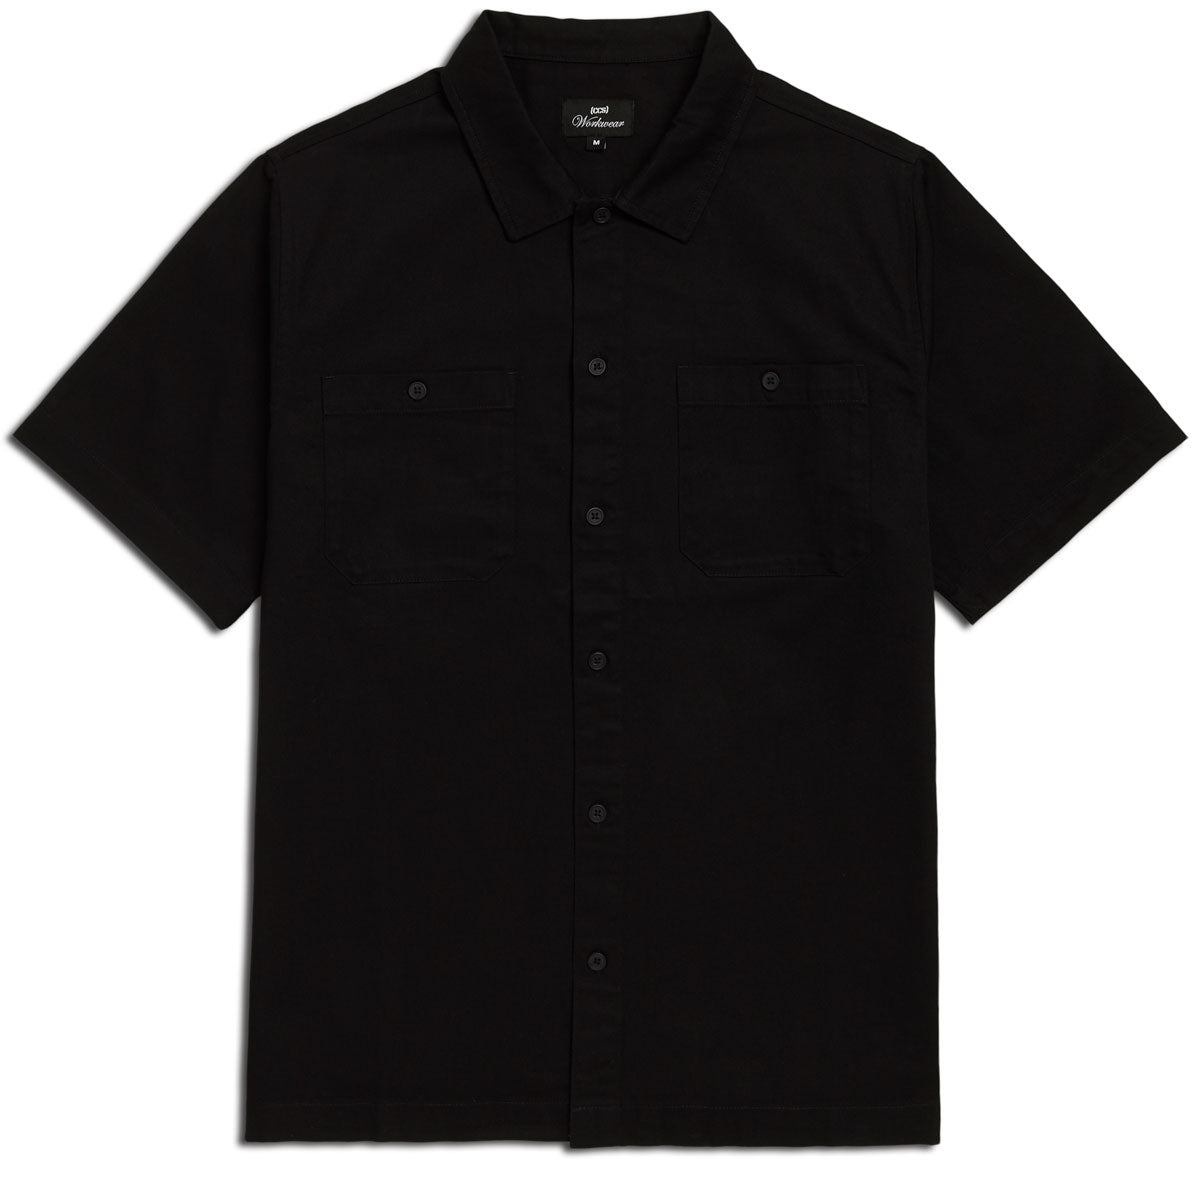 CCS Heavy Cotton Work Shirt - Black image 1